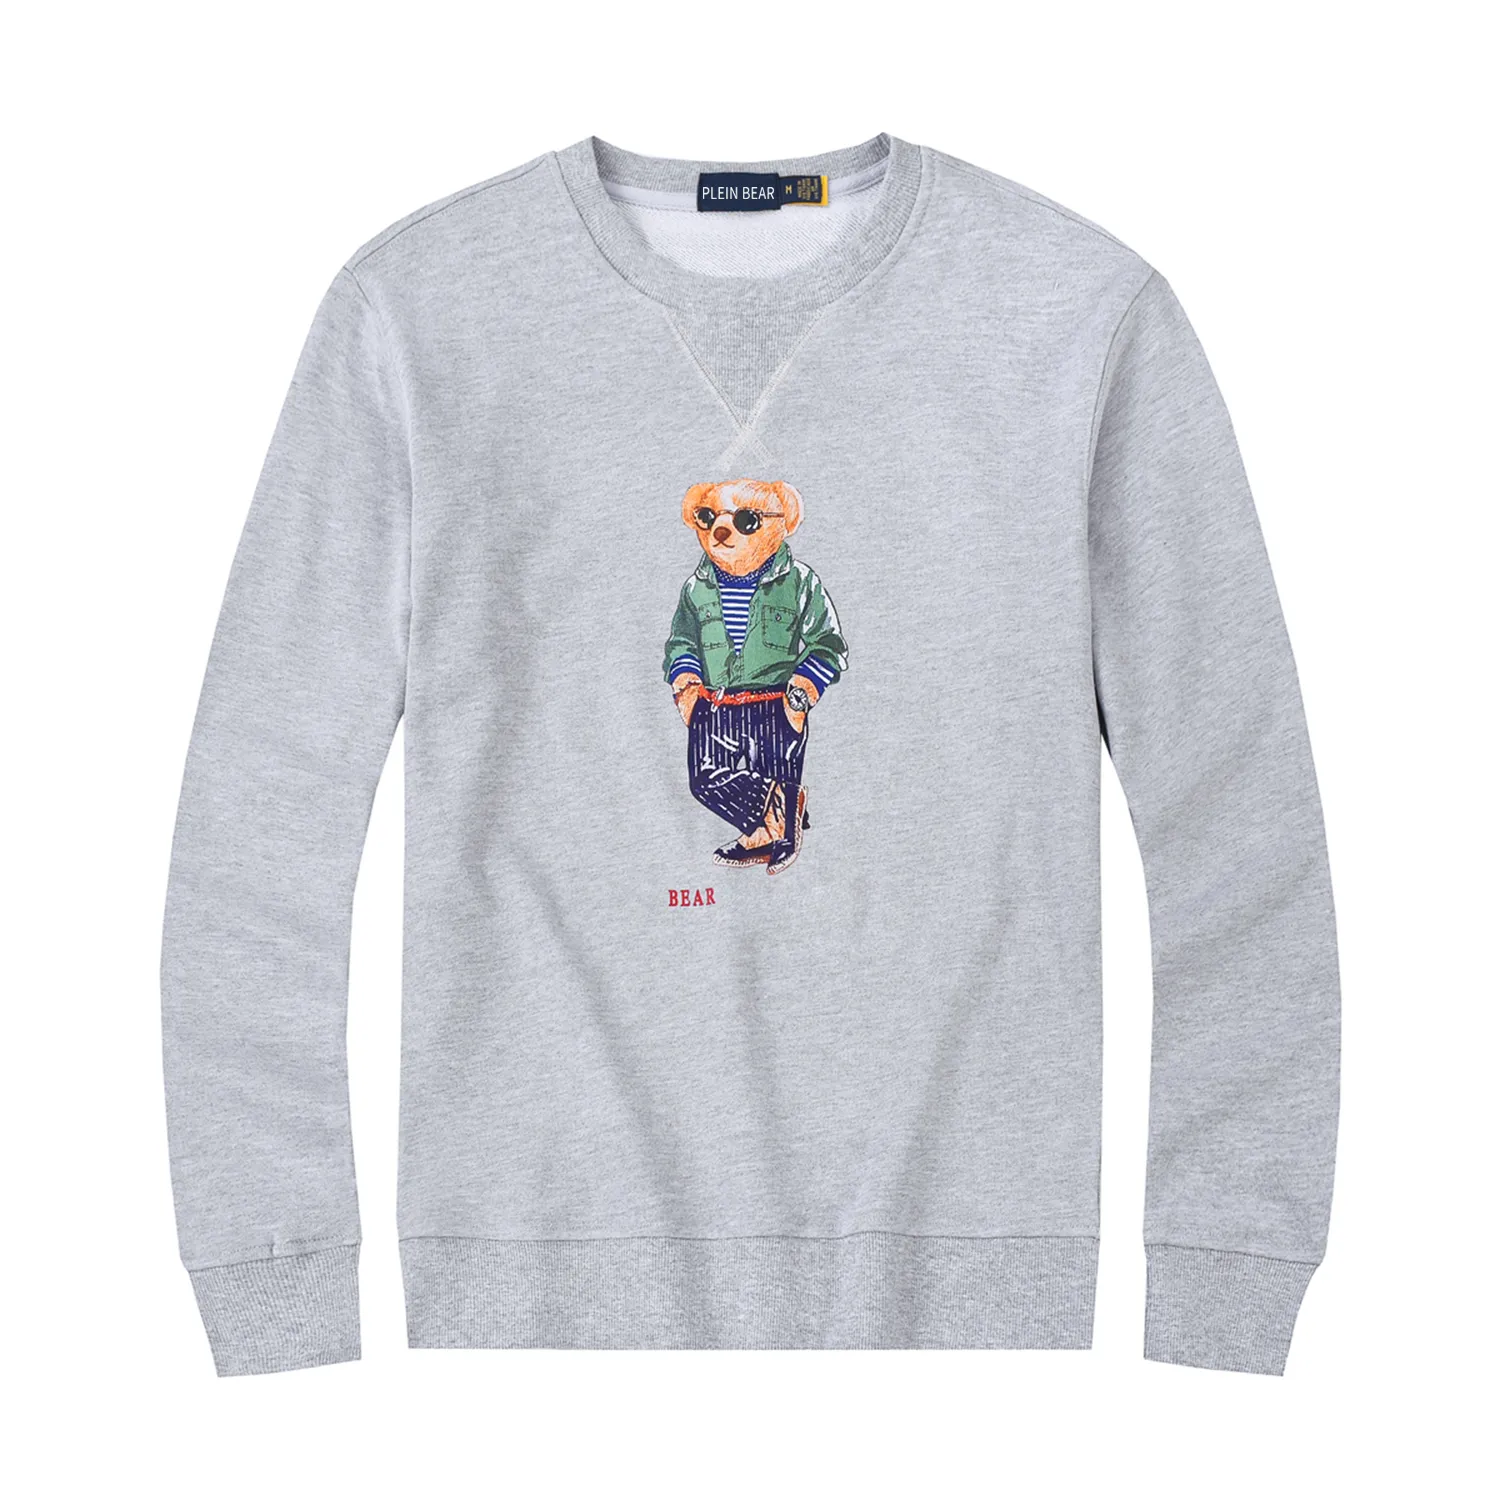 Plein Bear Brand Hoodies Sweatshirts دافئة سميكة من النوع الثقيل الهيب هوب السحب المميز Teddy Teddy Bear Hoodie 9079